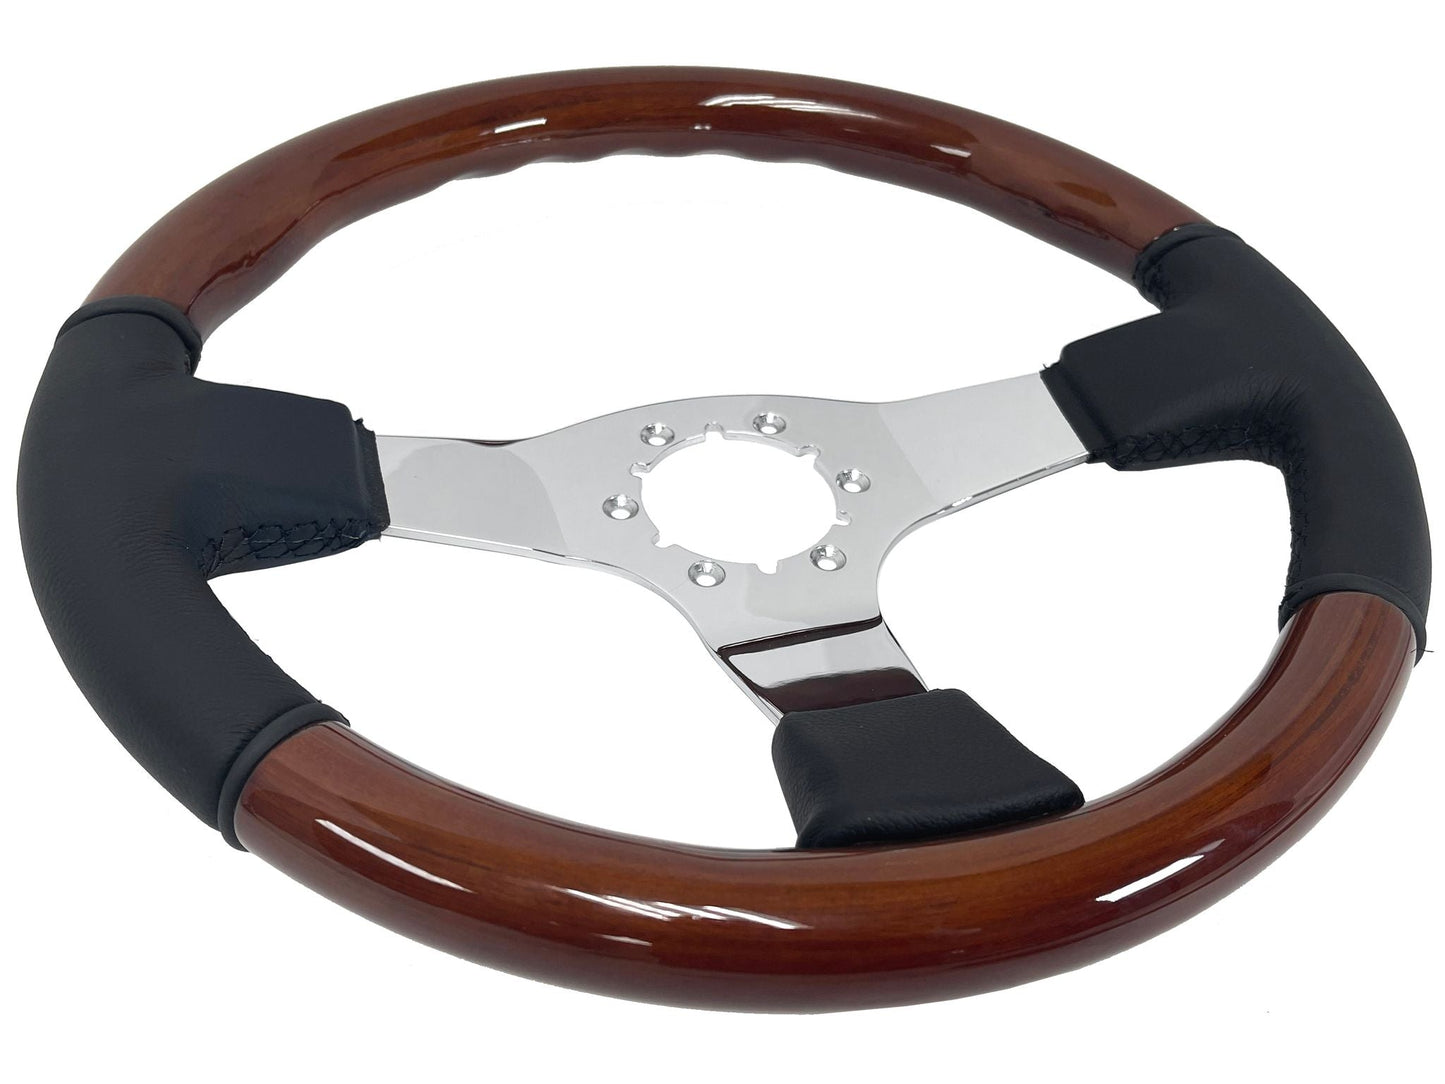 1969-89 Cadillac Telescopic Steering Wheel Kit | Mahogany Wood - Leather | ST3019